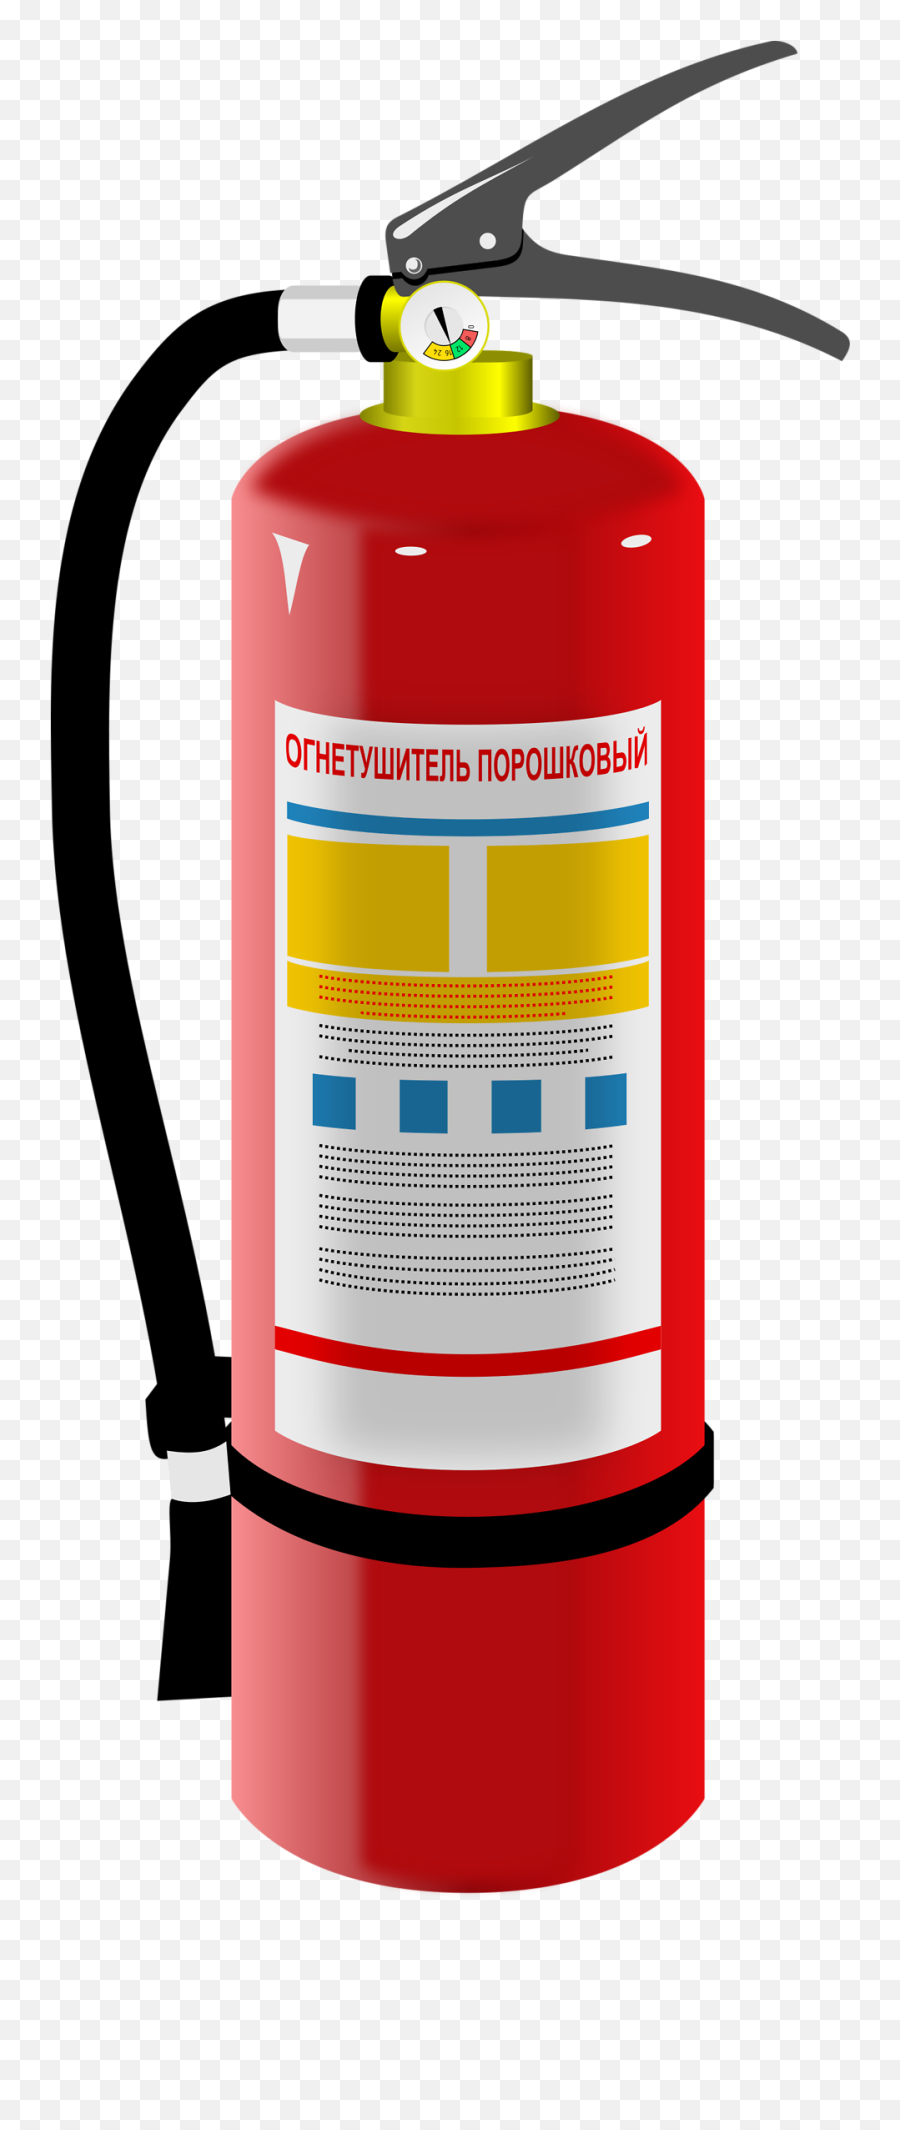 Flame Clipart Emoji Flame Emoji Transparent Free For - Transparent Background Fire Extinguisher Icon,Flame Emoji